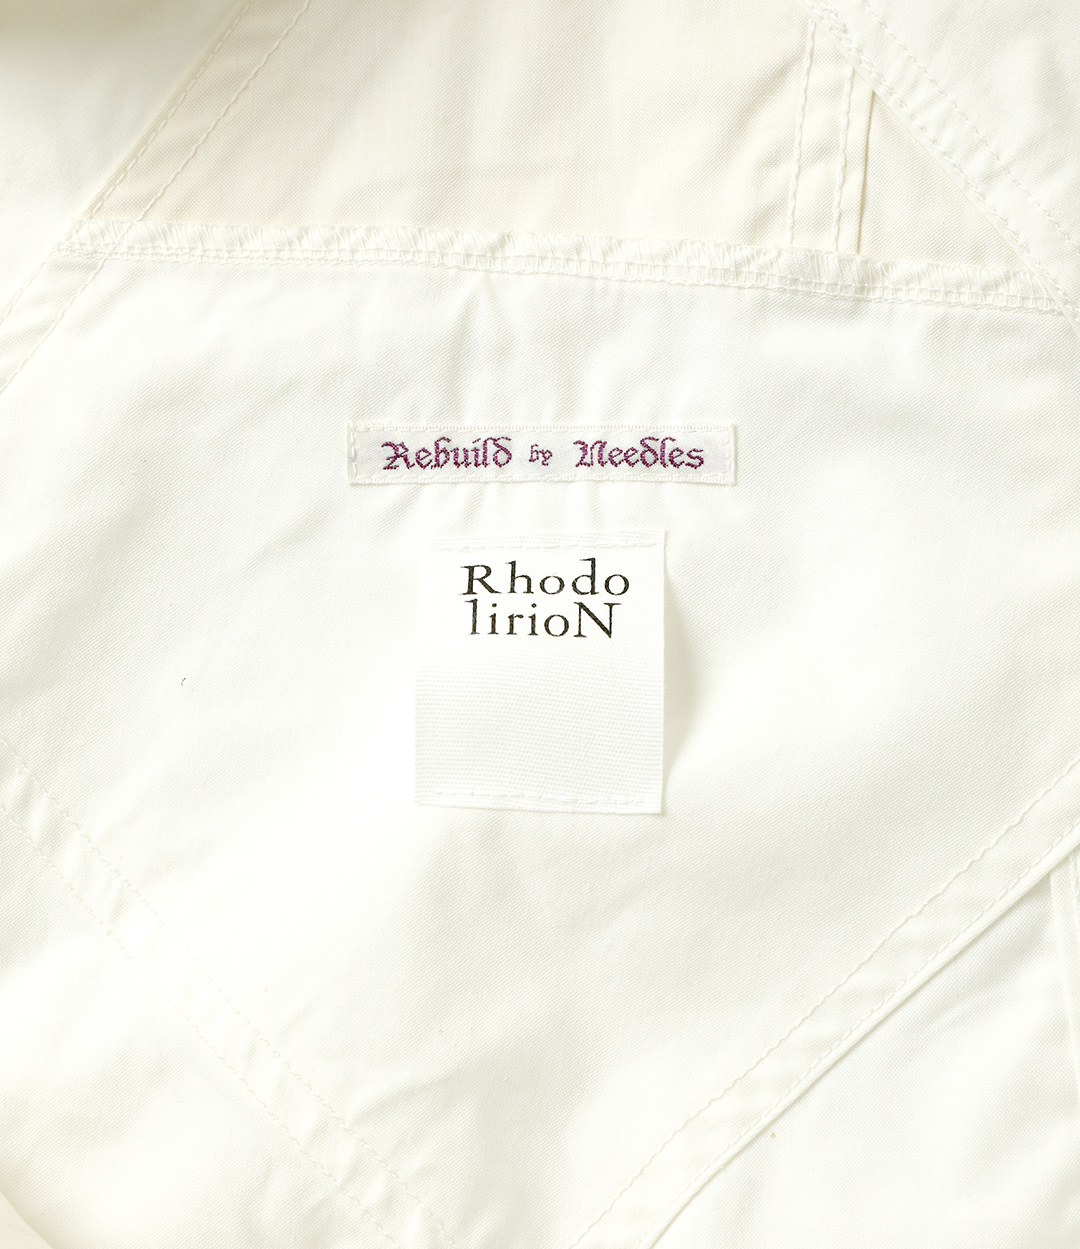 〈REBUILD by NEEDLES〉x 〈RHODOLIRION〉